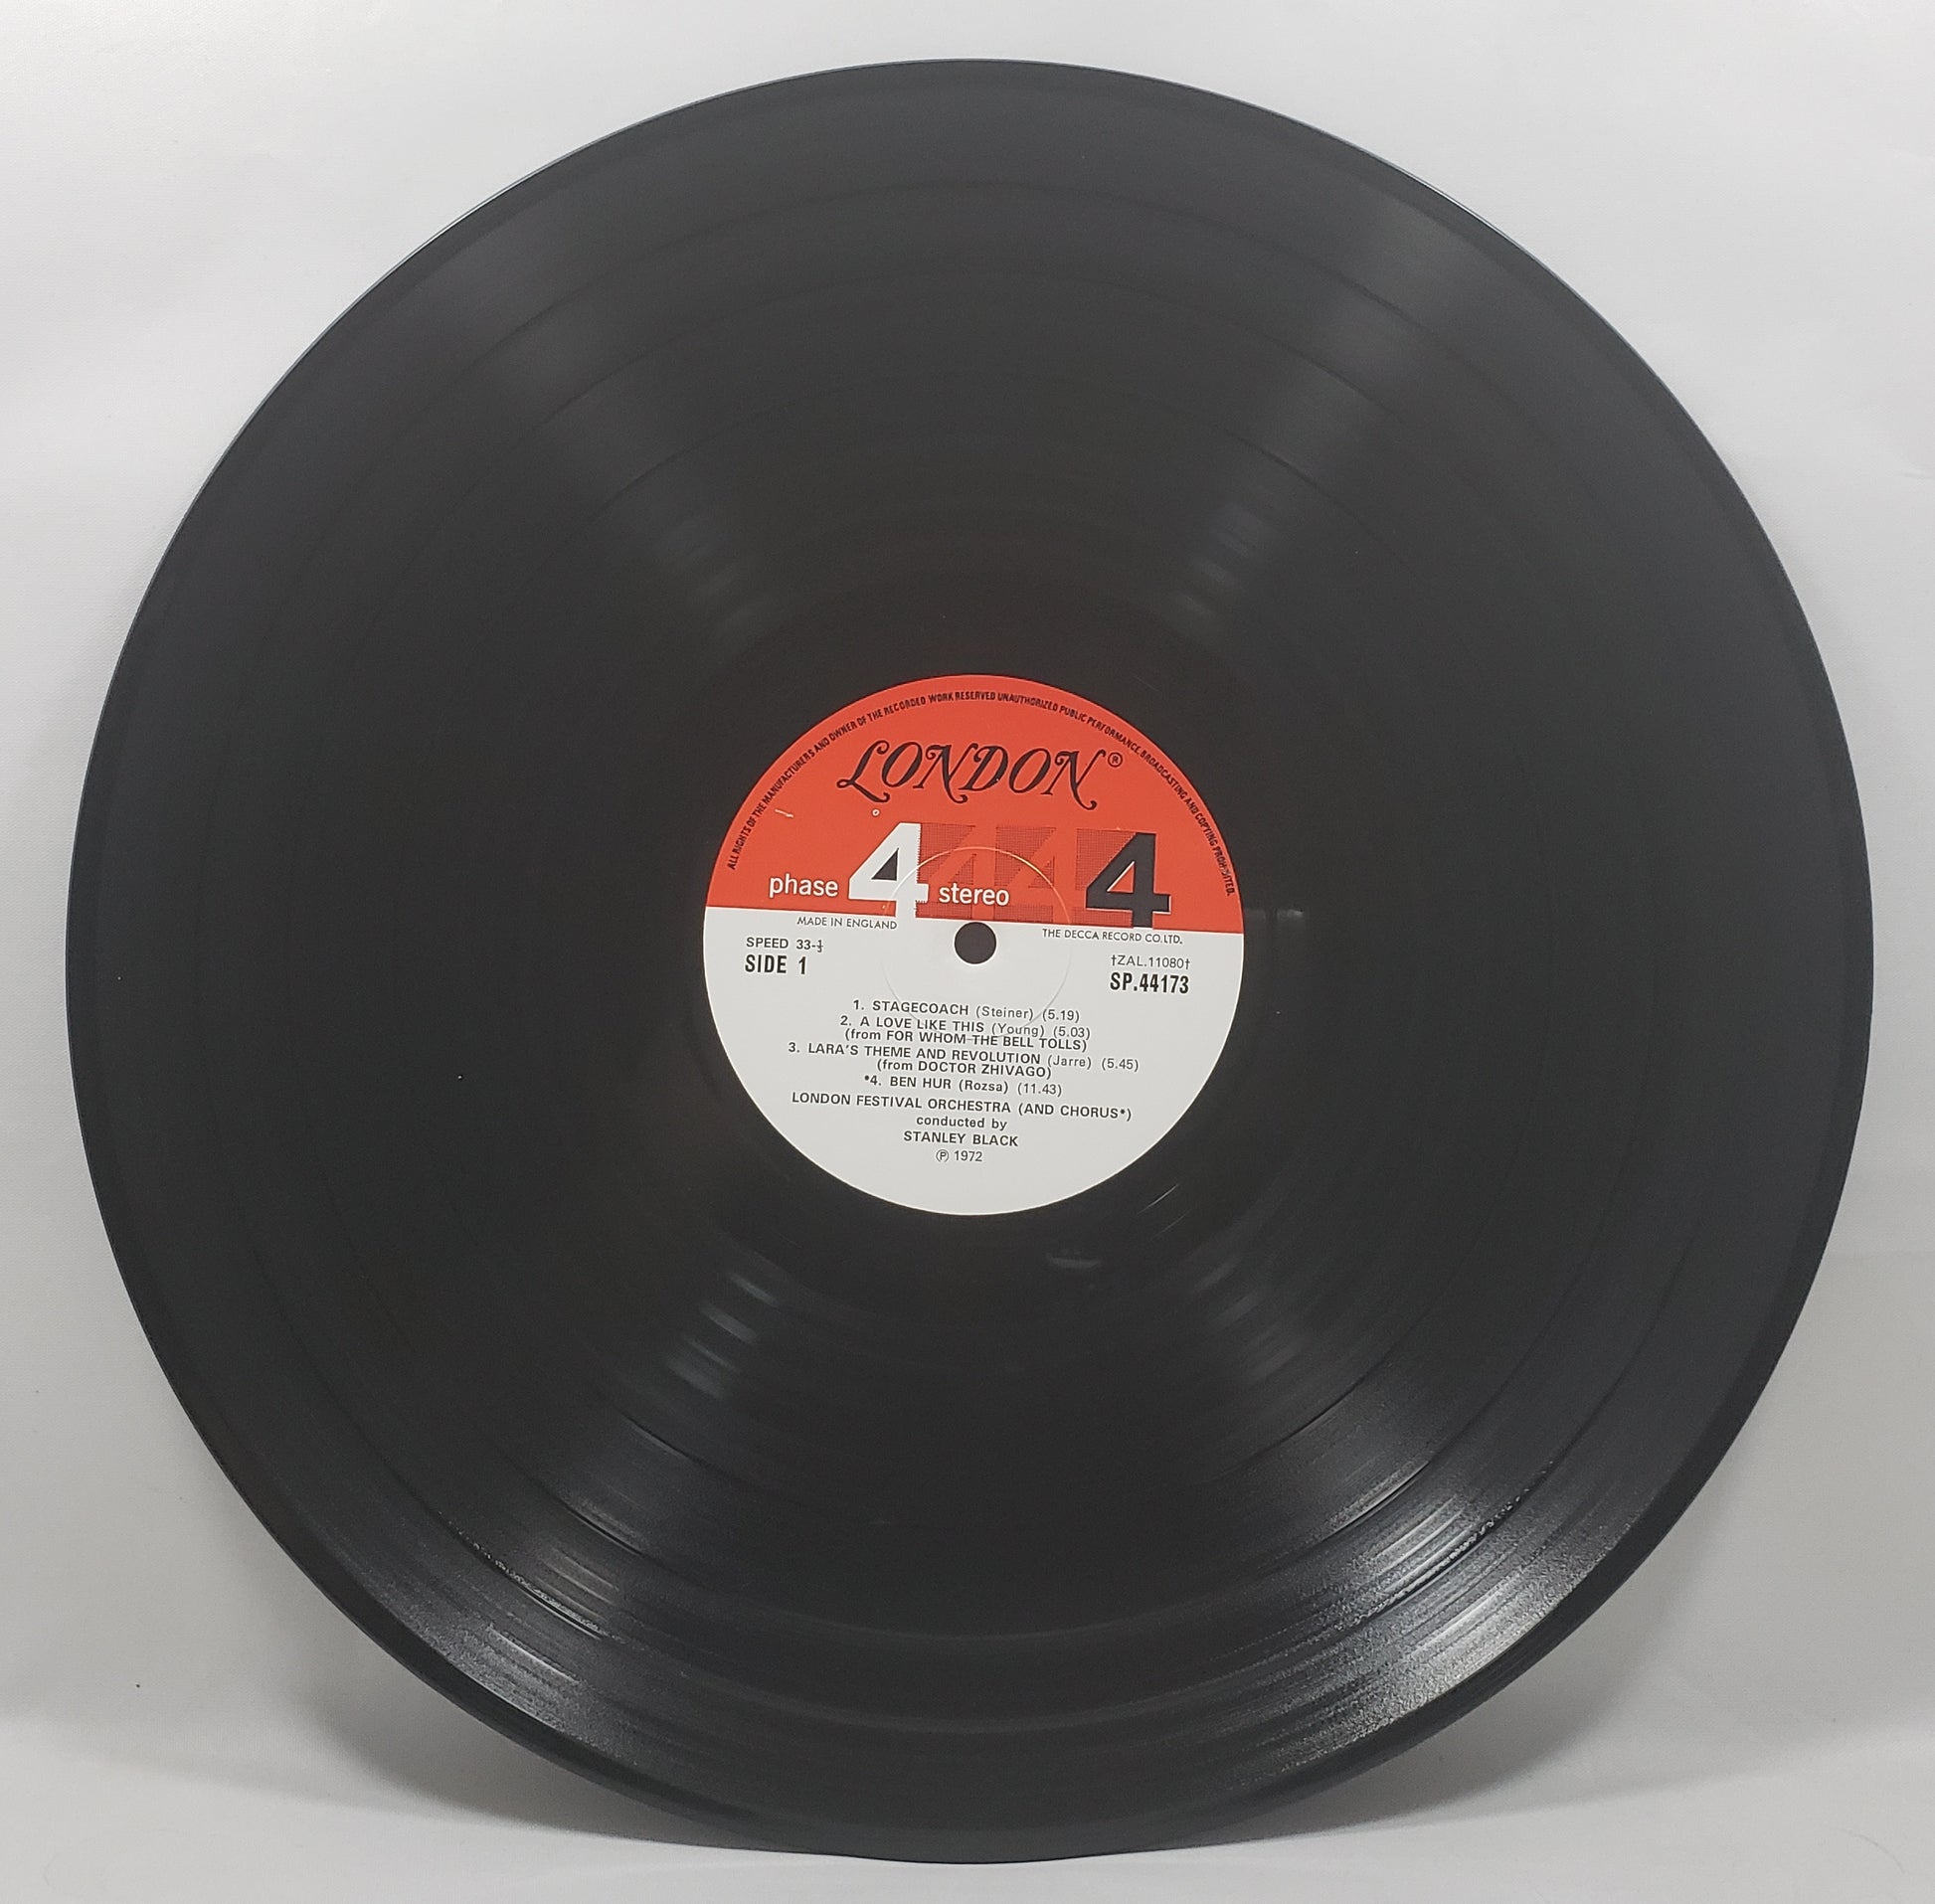 Stanley Black - Film Spectacular Volume 4 "The Epic" [1972 Used Vinyl Record LP]